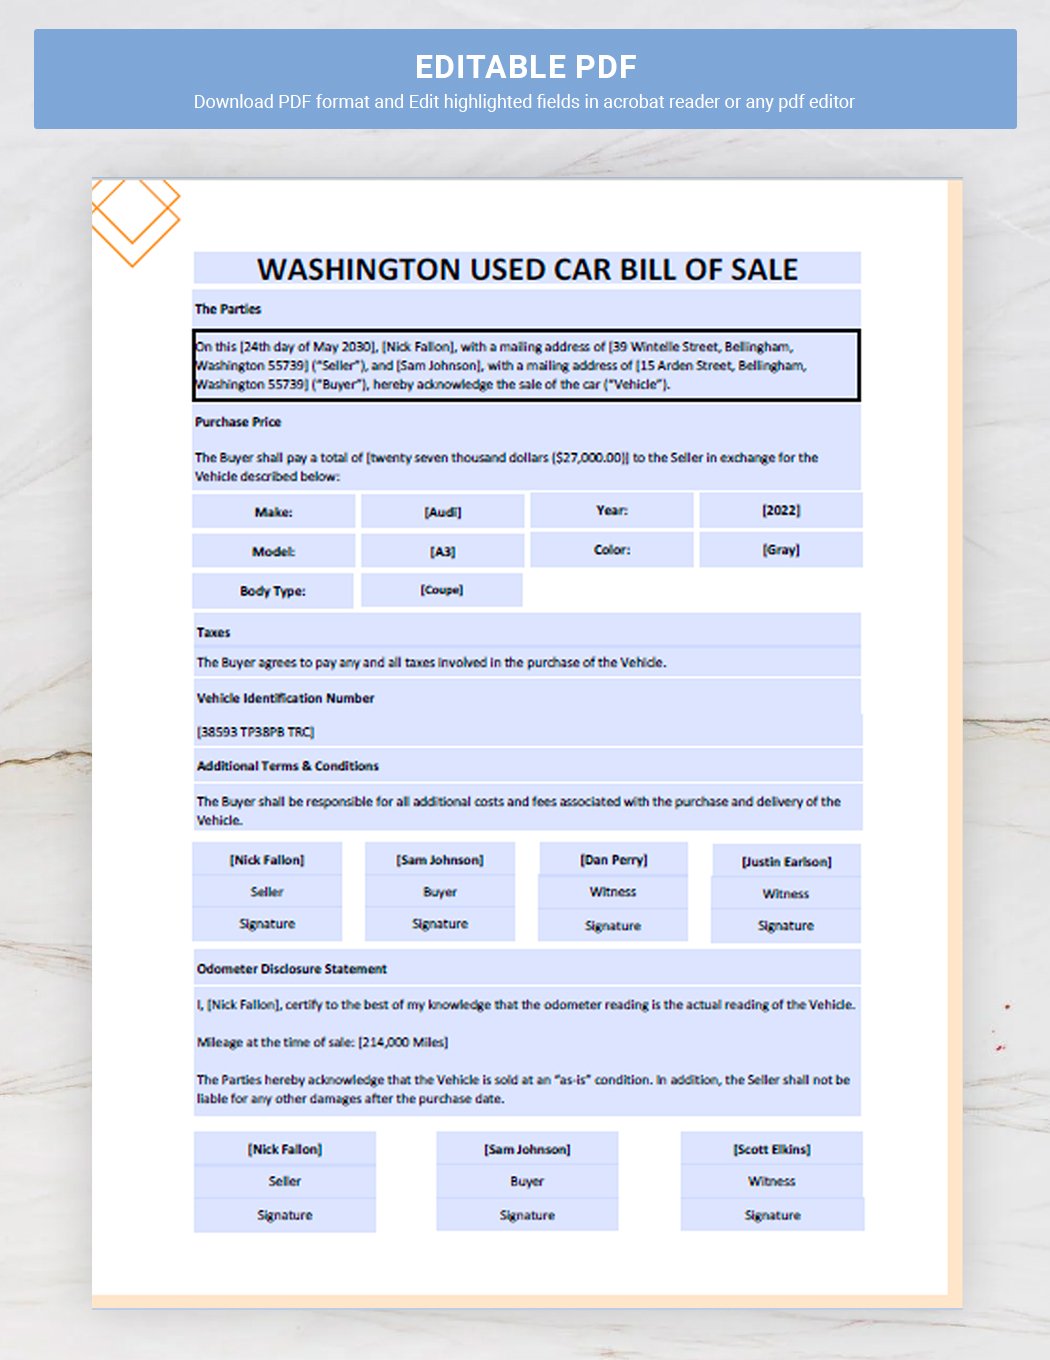 Washington Used Car Bill of Sale Template